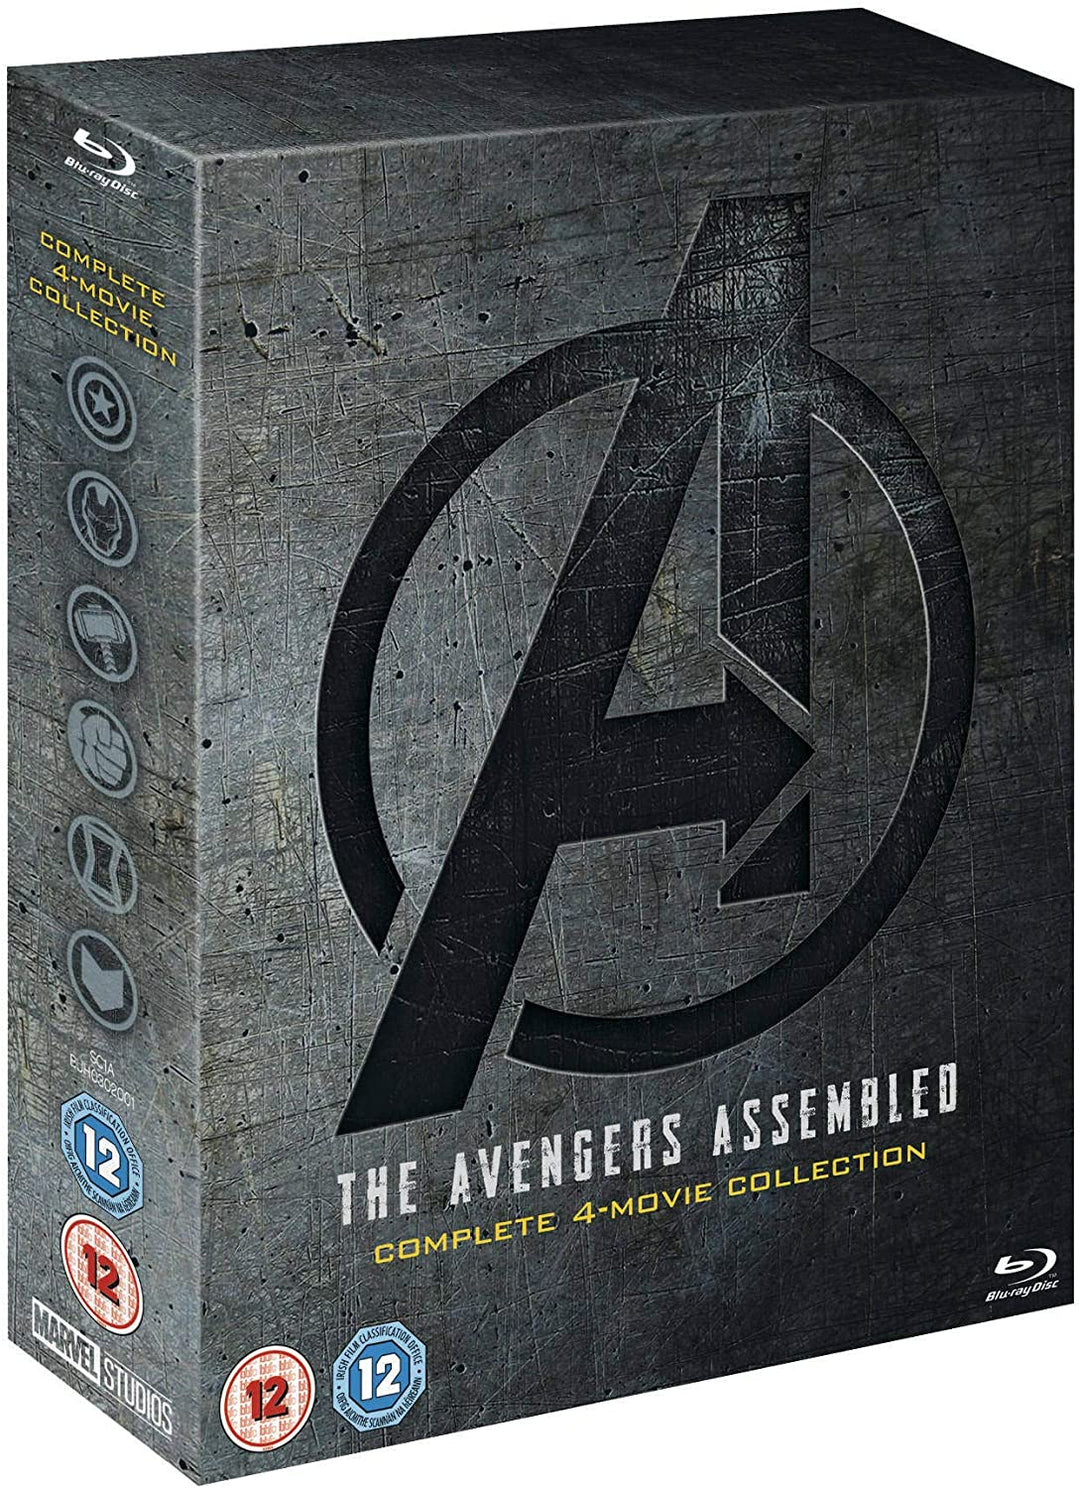 Avengers: 1-4 Complete Blu-ray Boxset Includes Bonus Disk - Action/Adventure [Blu-ray]